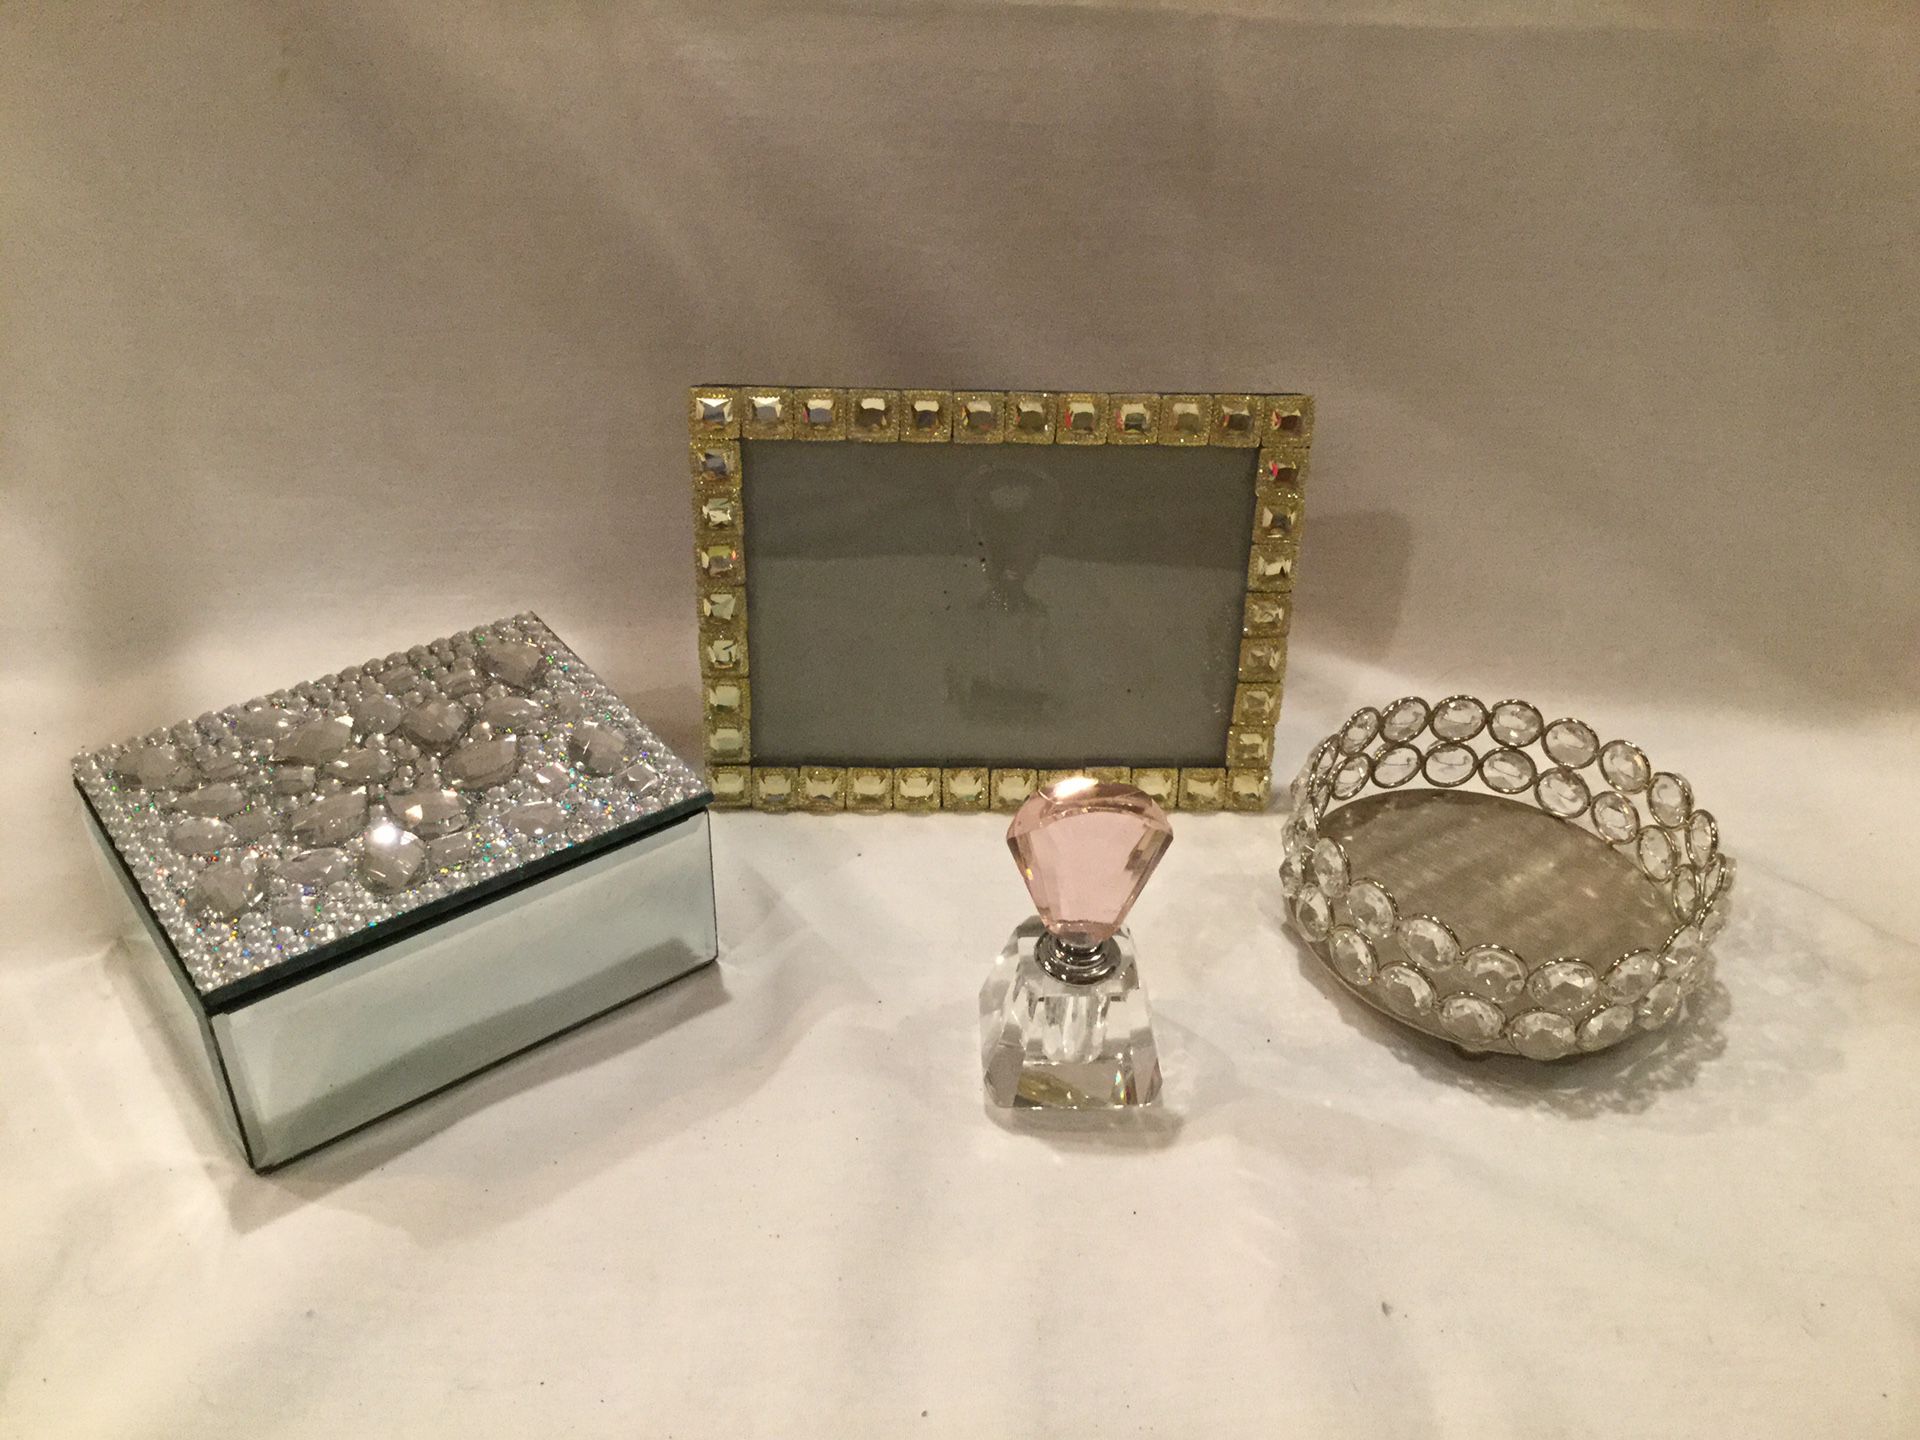 Decorative Crystal Rhinestone Accessories Frame Jewelry Box Candleholder